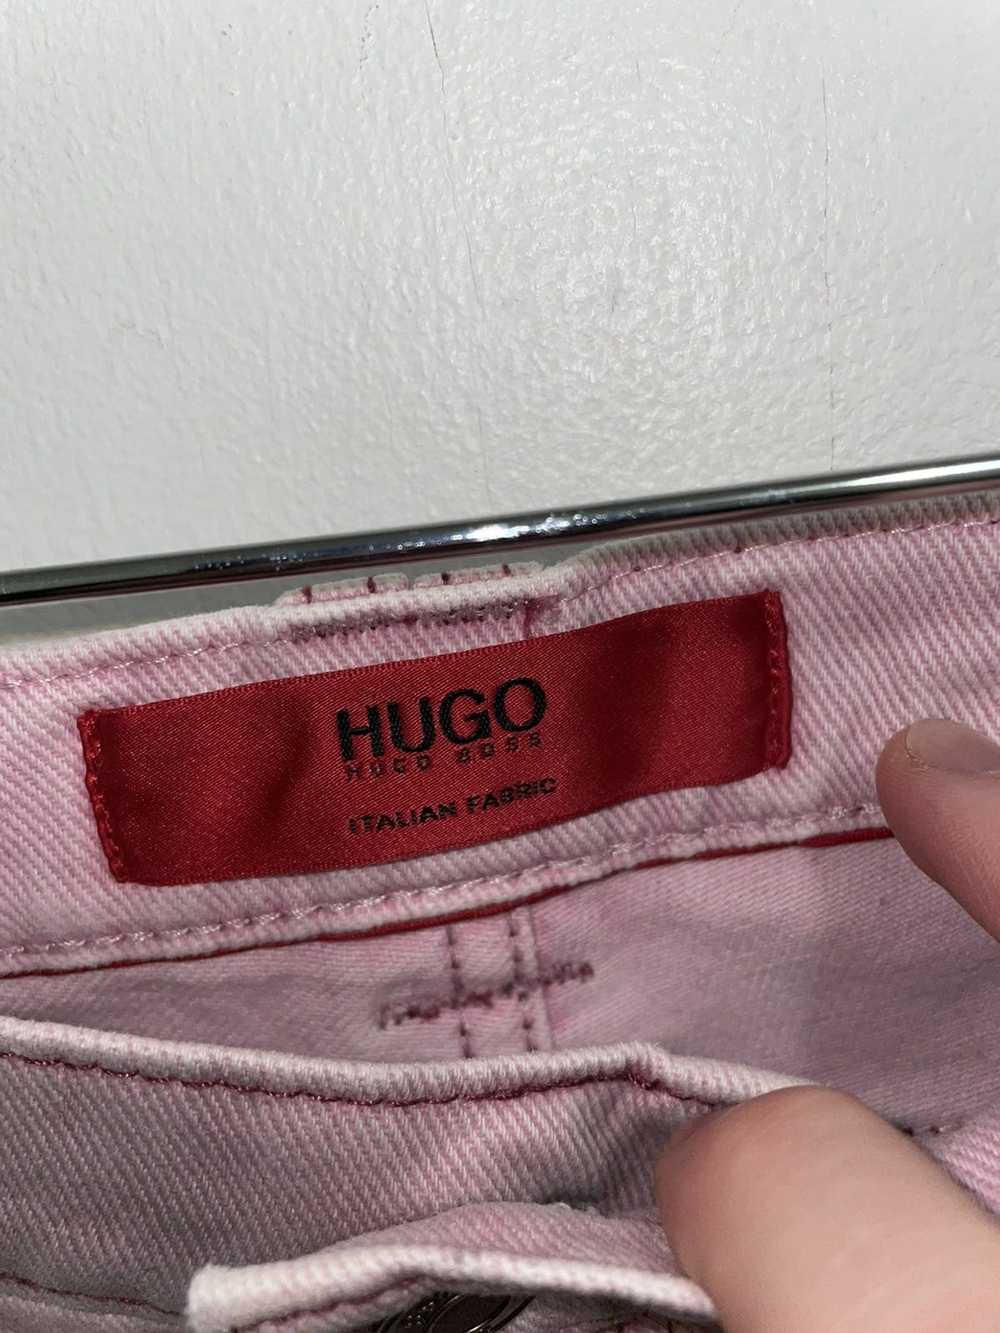 Hugo Boss Pink Hugo Boss Light Wash Jeans - image 2